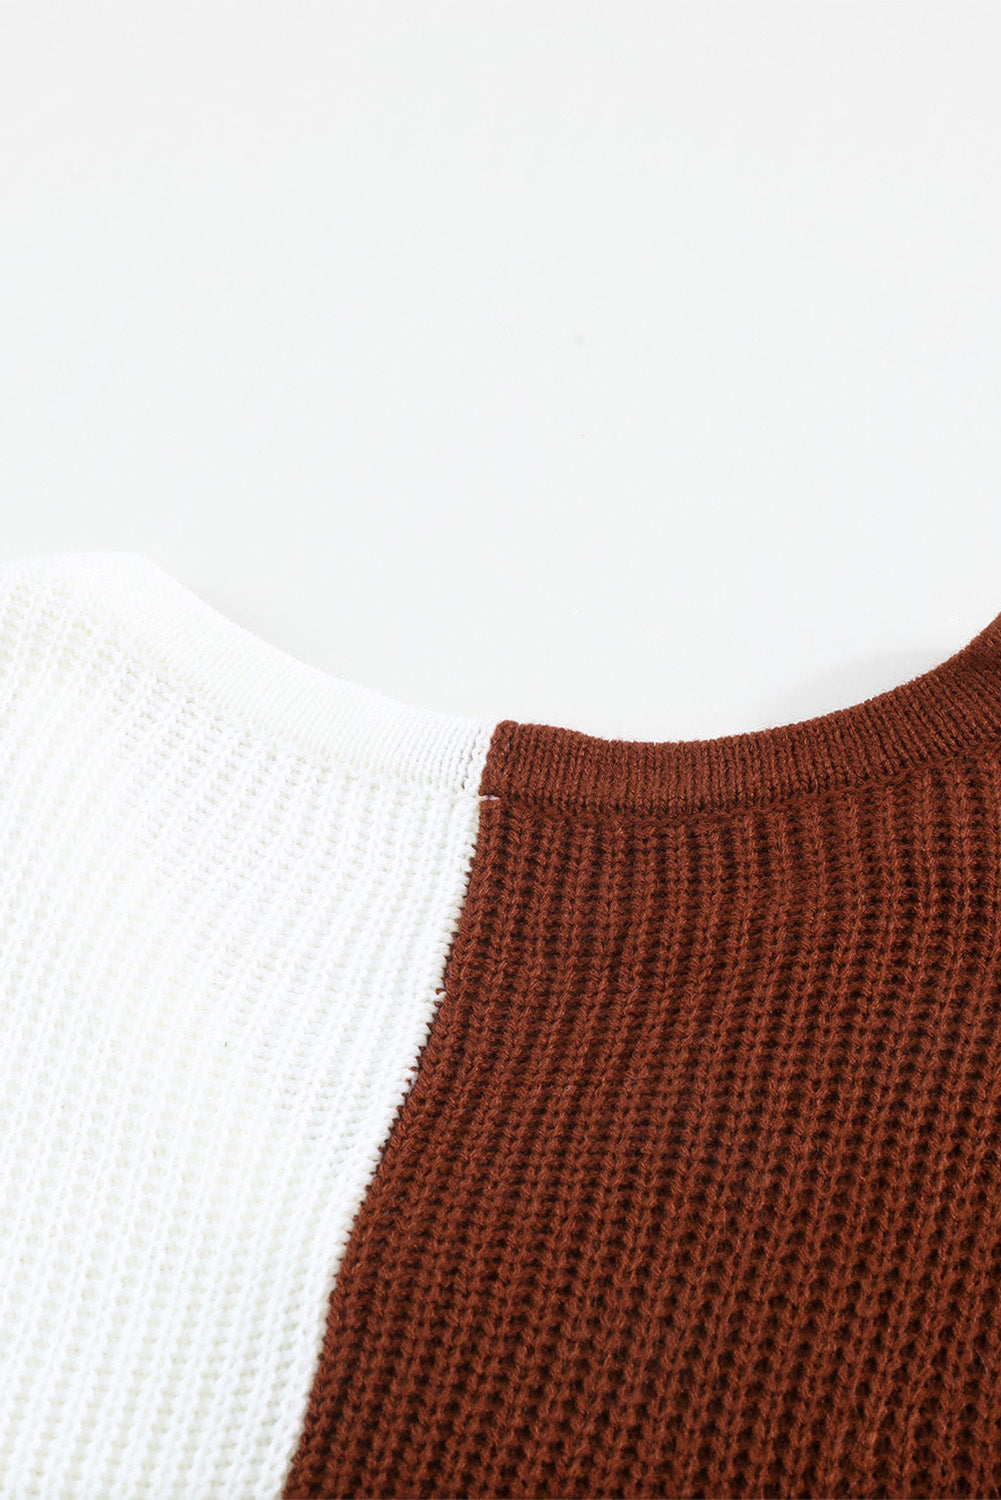 Print Contrast Color V Neck Sweater